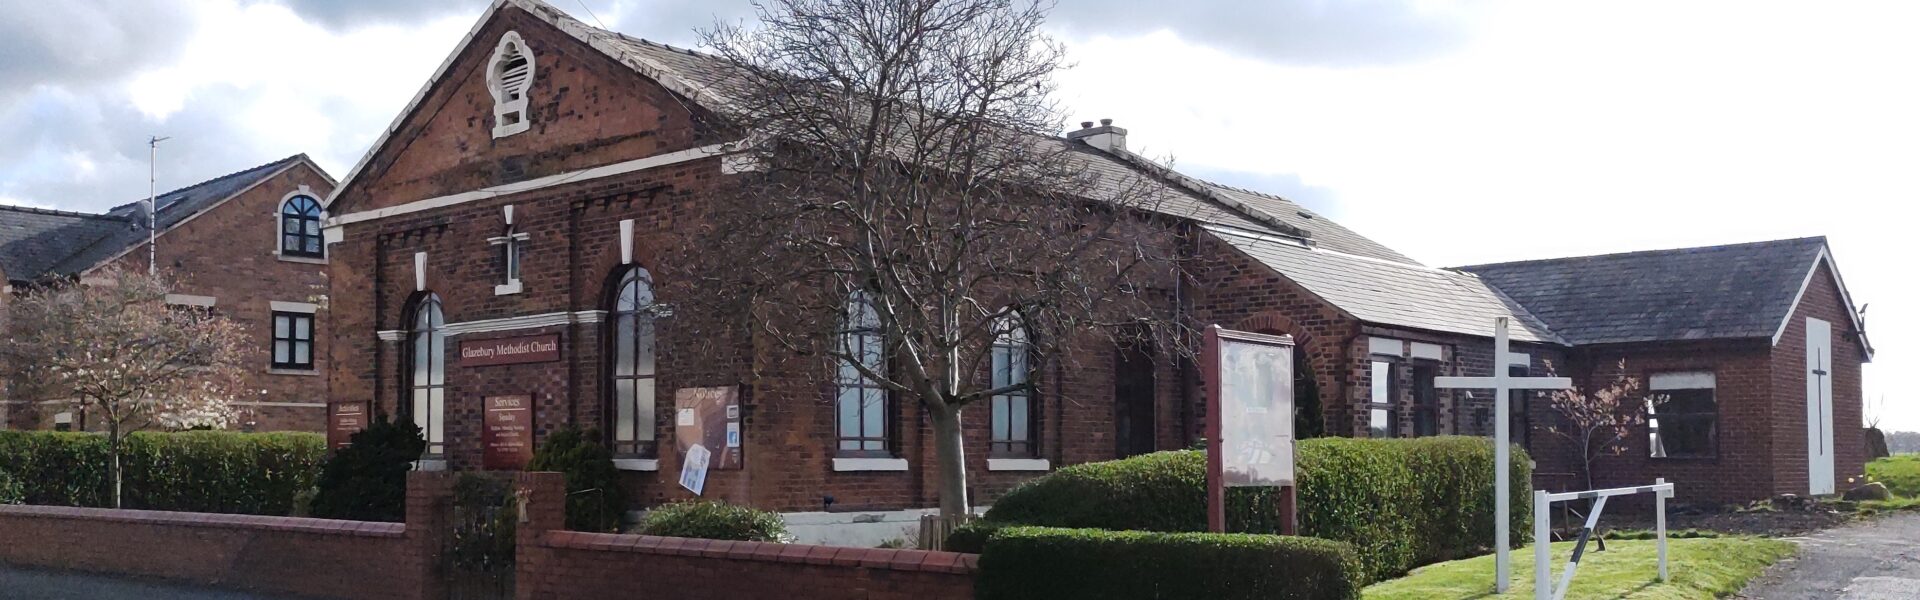 Glazebury Methodist Church, one of the venues for Parish Council Meetings.